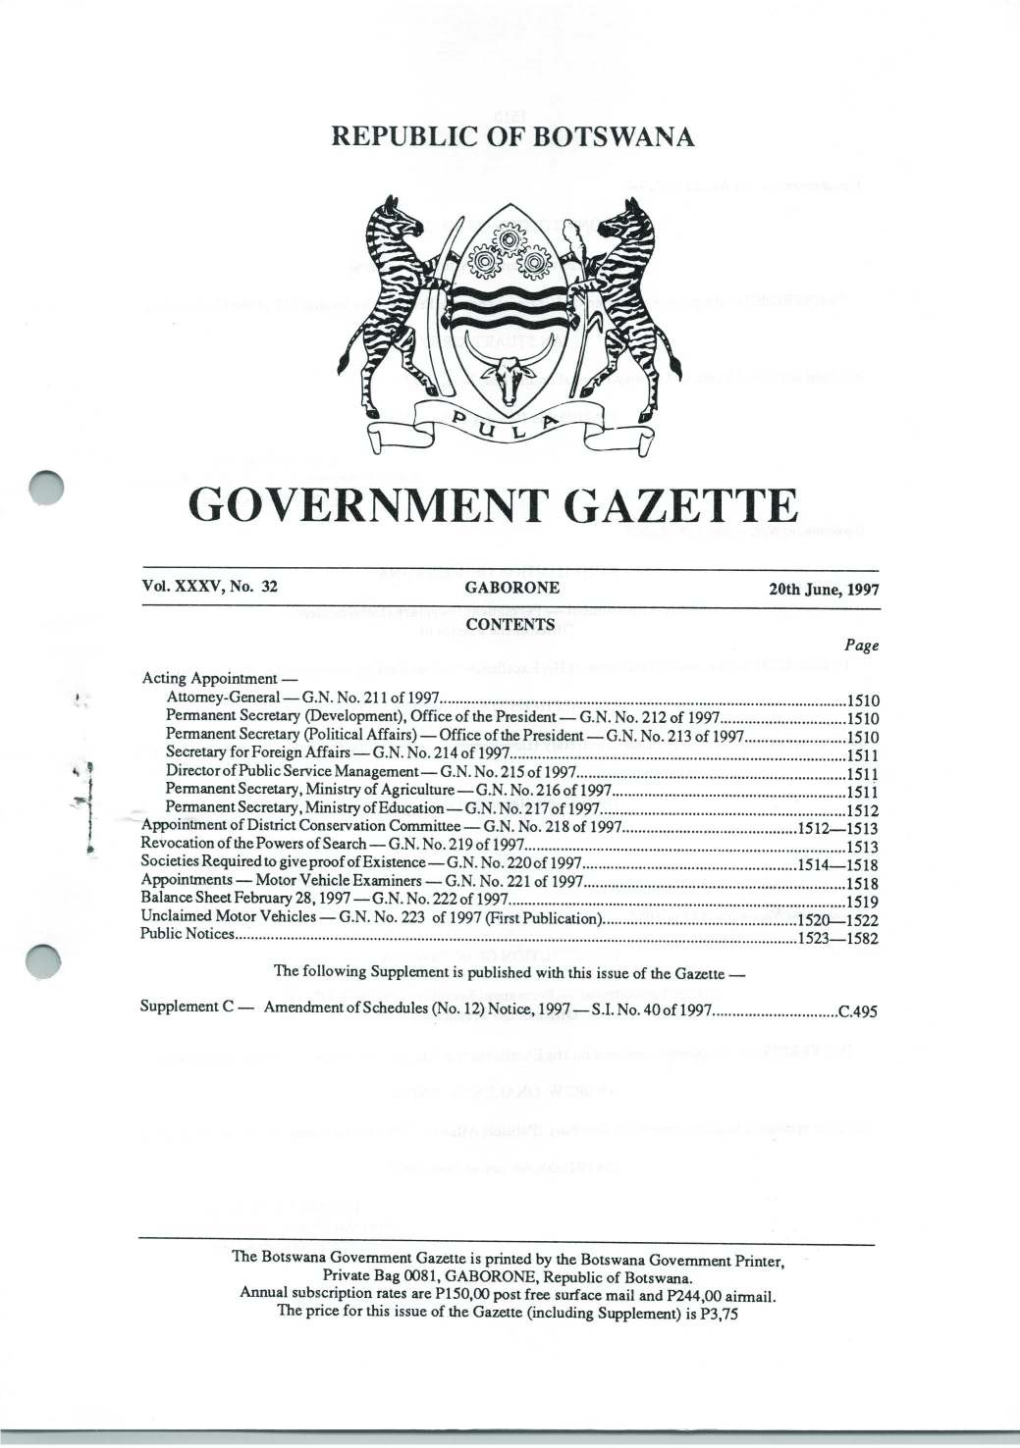 Government Gazette of Such Notice